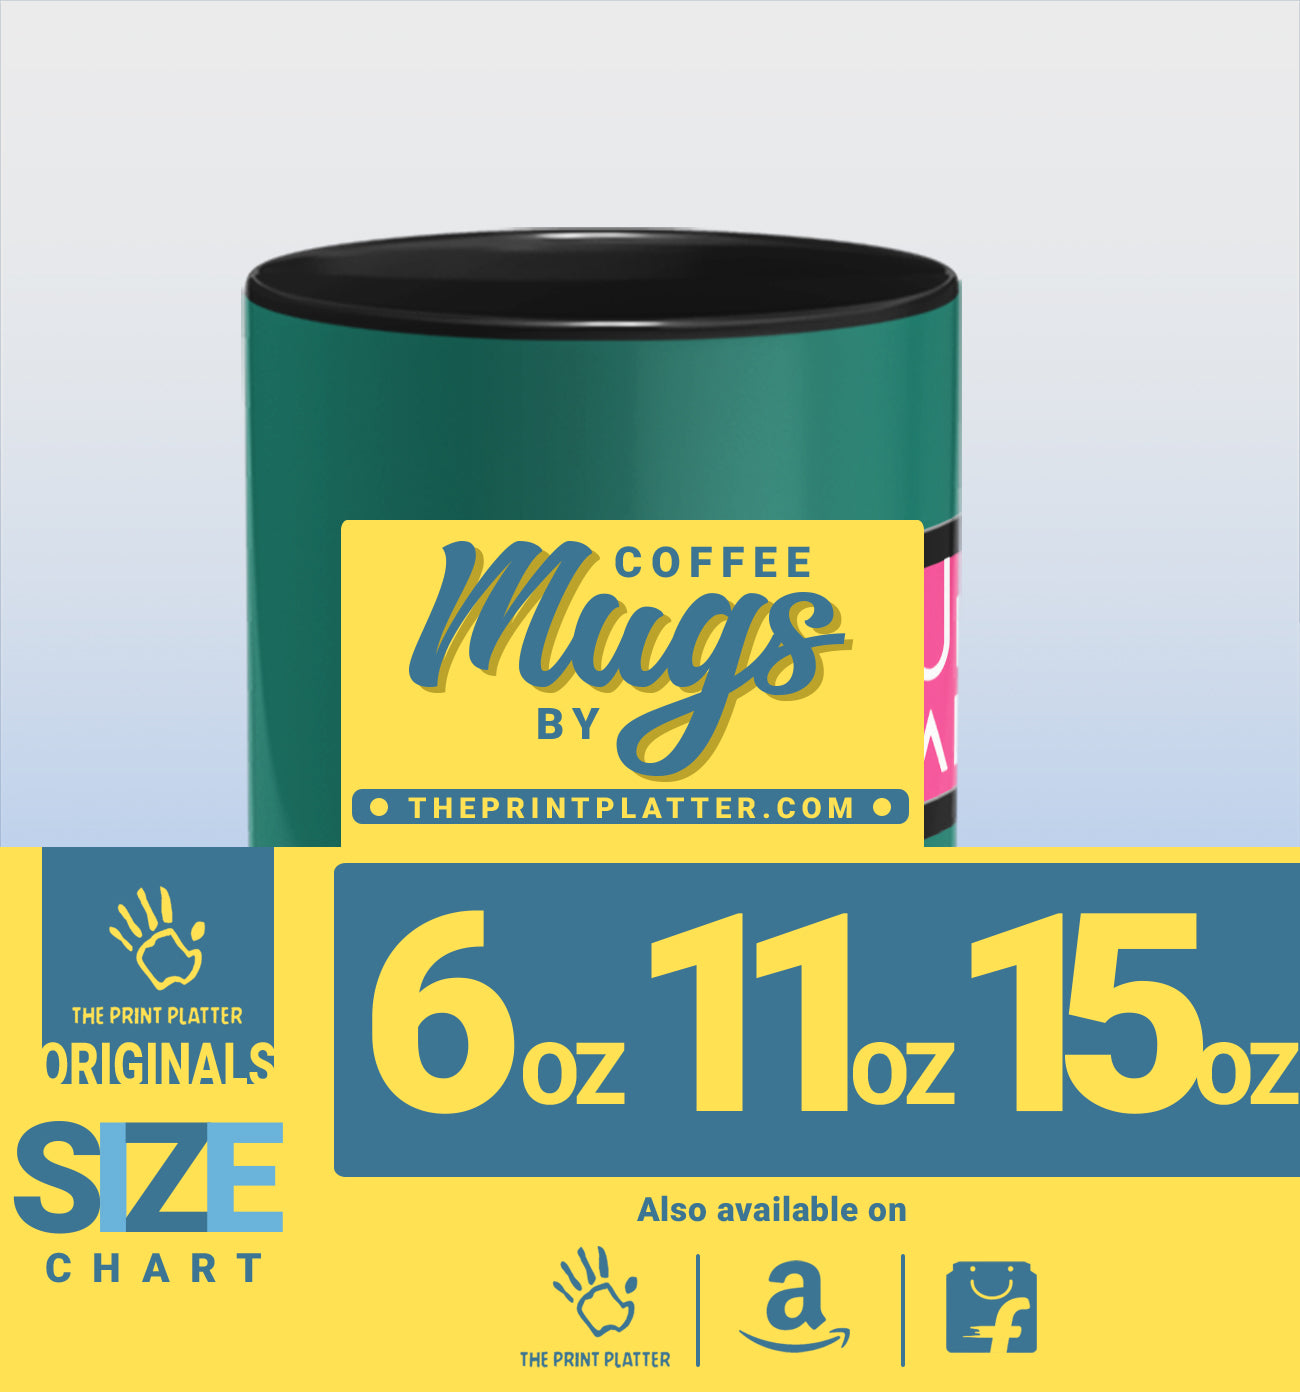 067 Squid Game Inside Black Cermic Coffee Mug 330 ml, Microwave & Dishwasher Safe| CM-R178